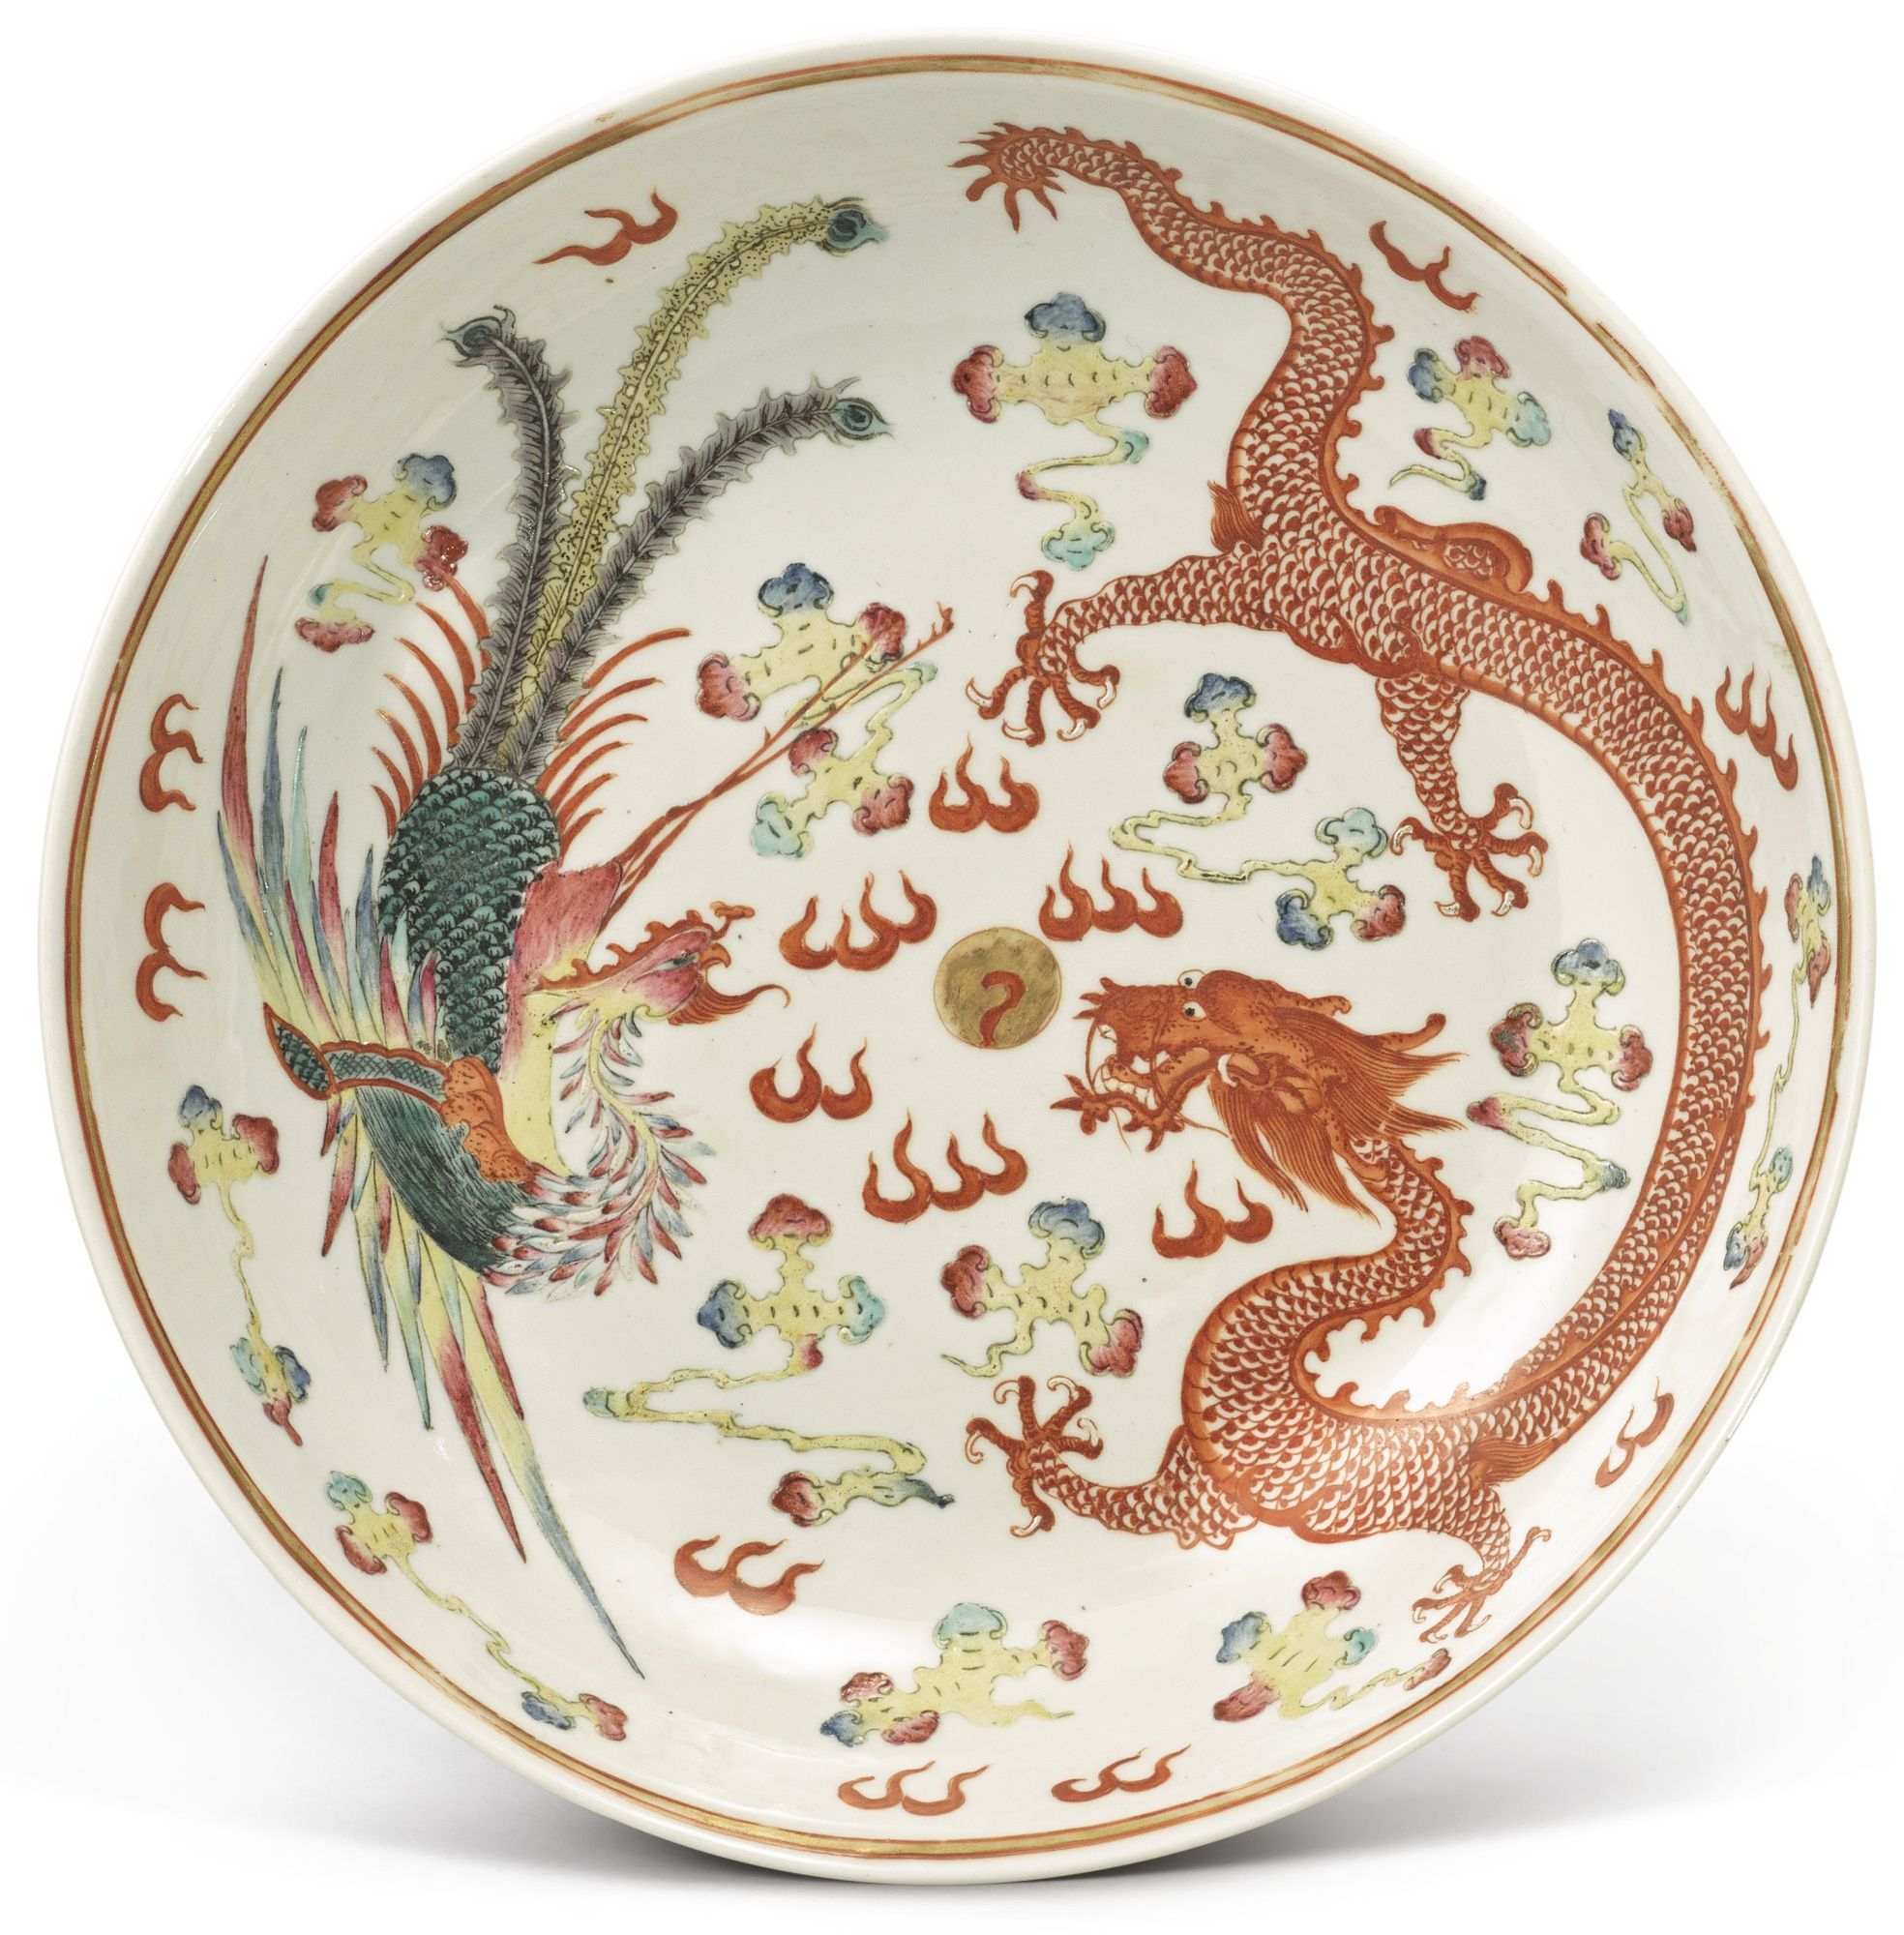 Китайский орнамент на посуде